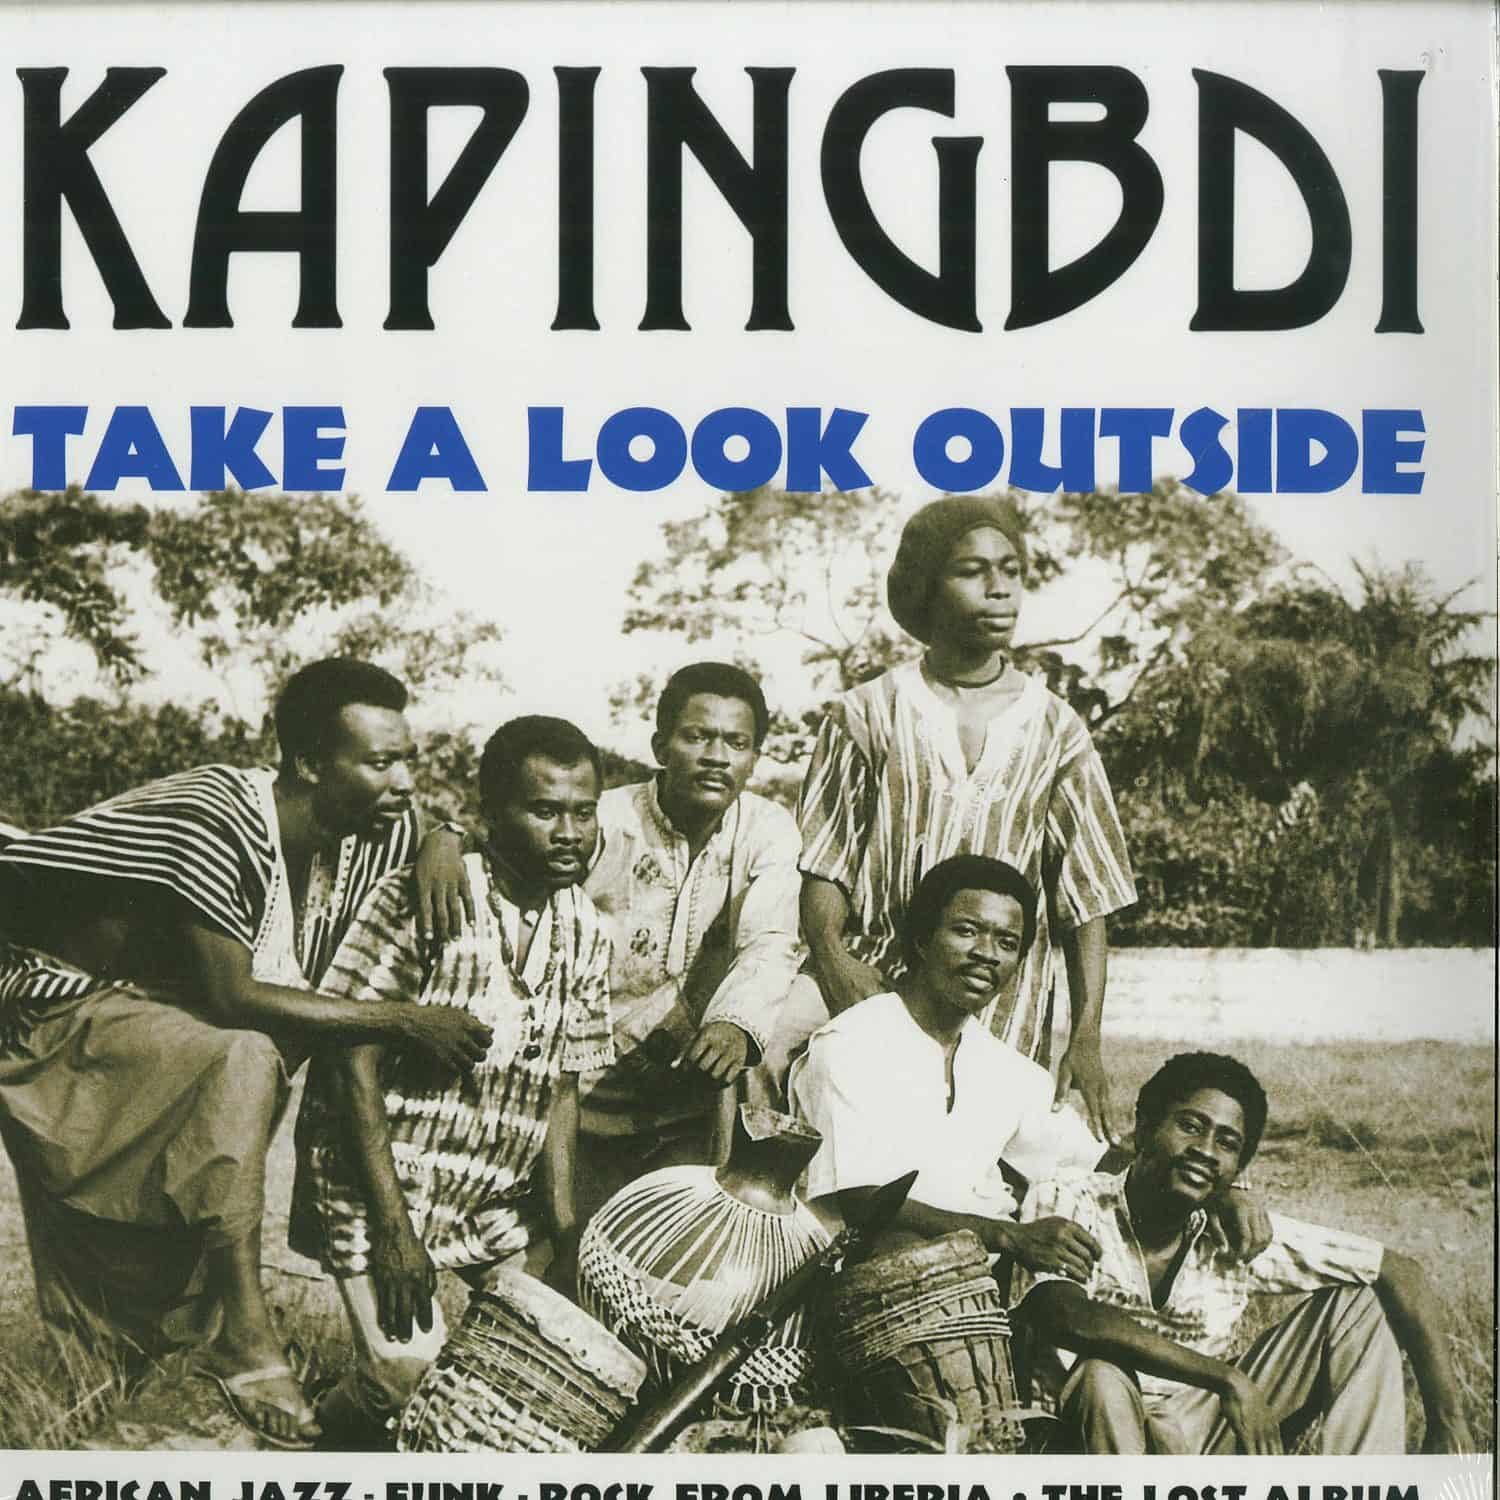 Kapingbdi - TAKE A LOOK OUTSIDE 